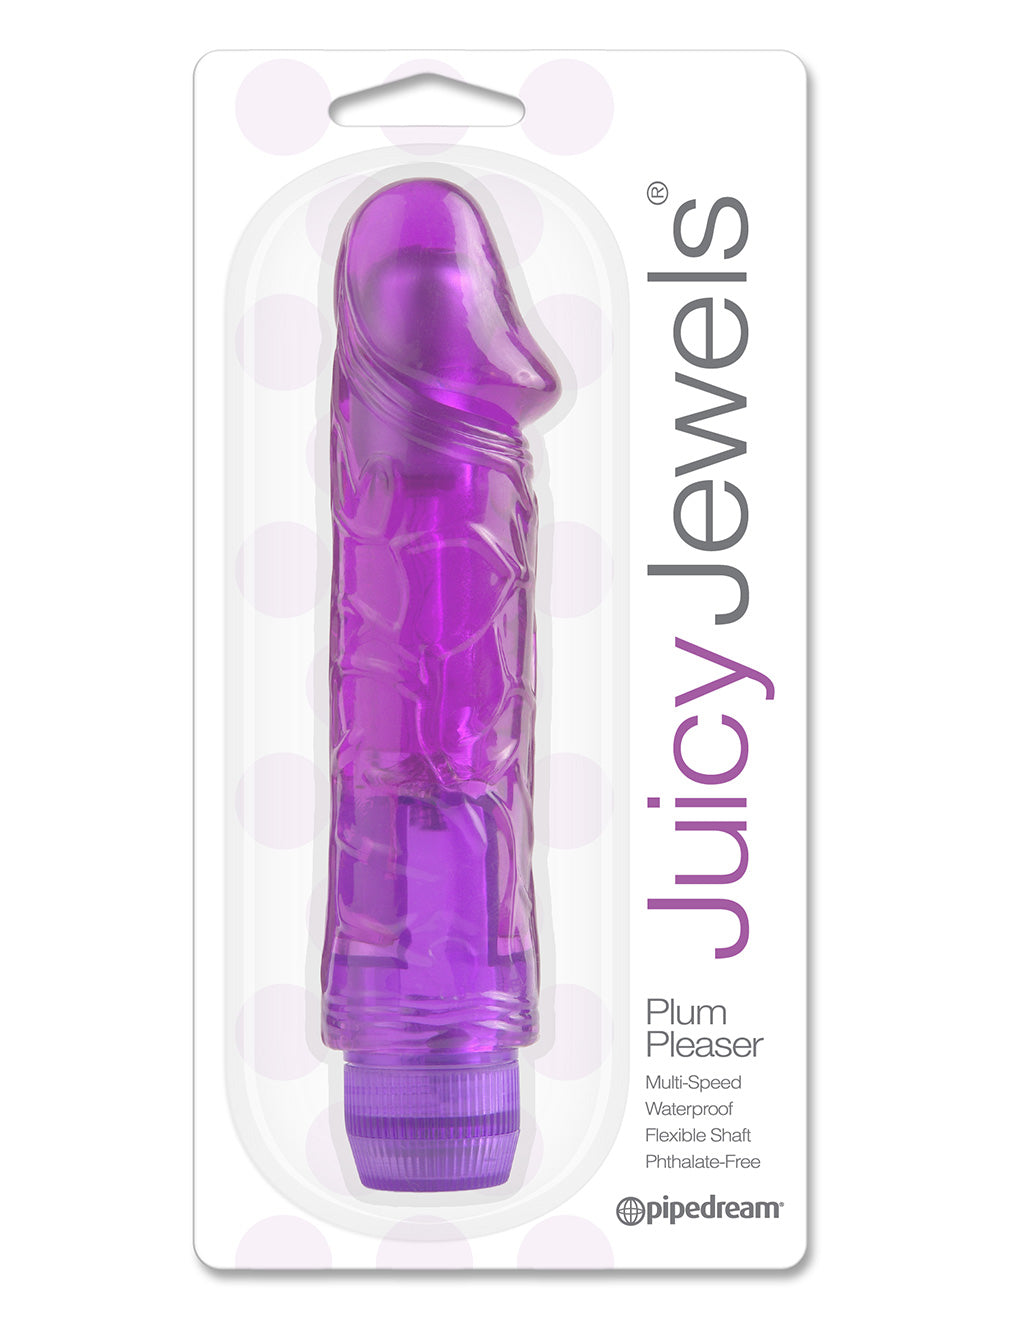 Juicy Jewels by Pipedream Plum Pleaser - Novelties - Massager